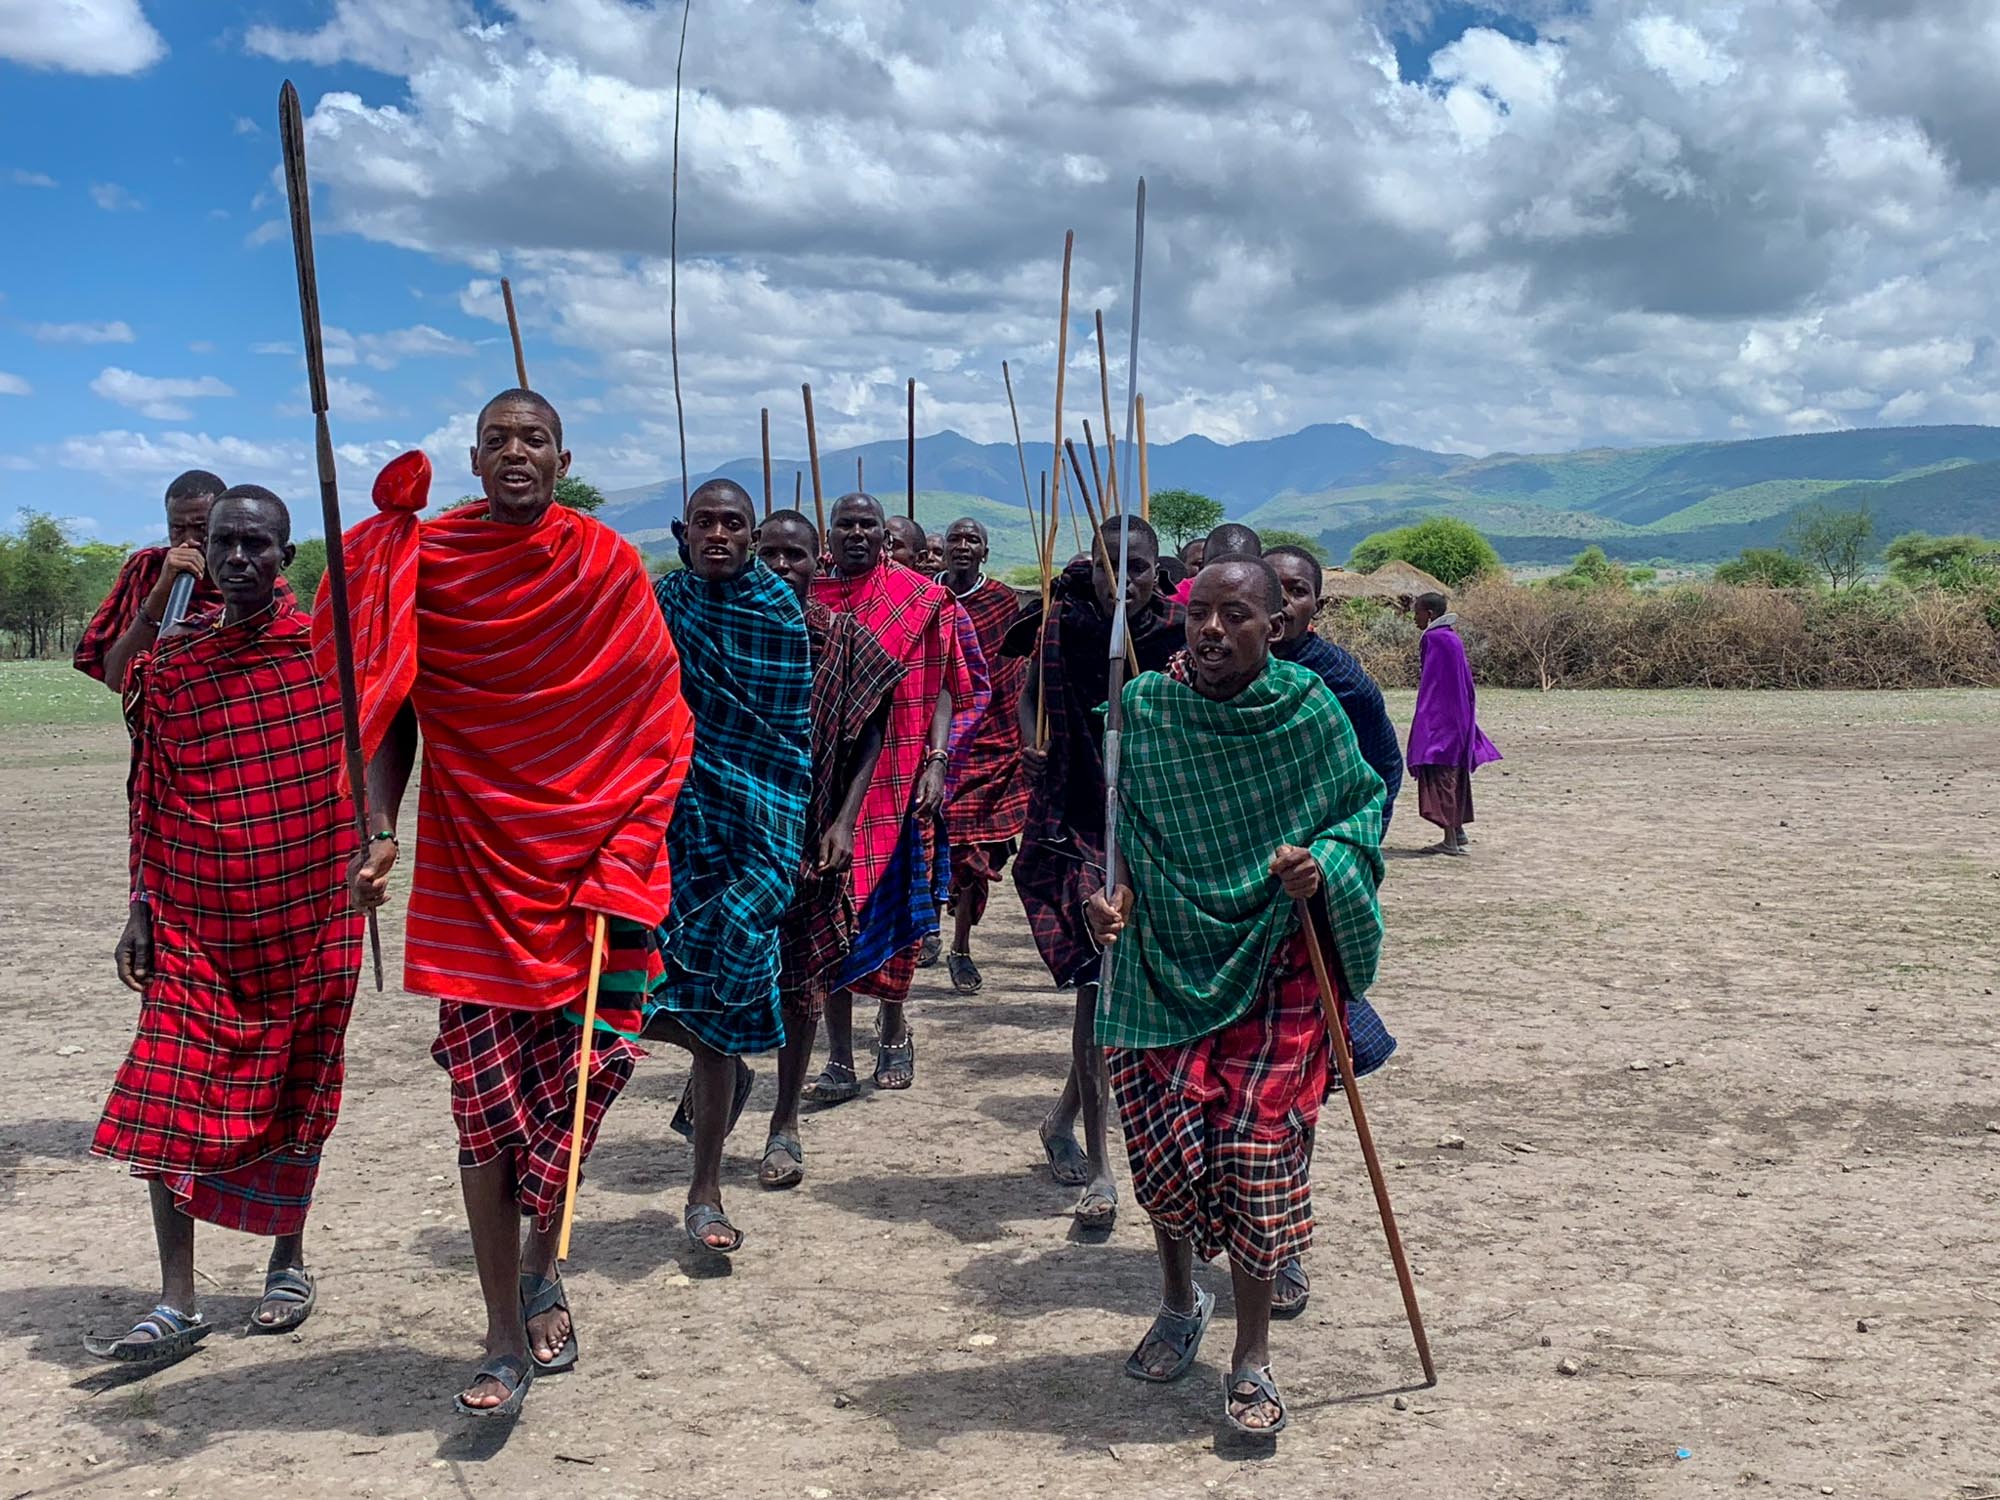 Foresight Ecolodge & Safari – Massai dancing